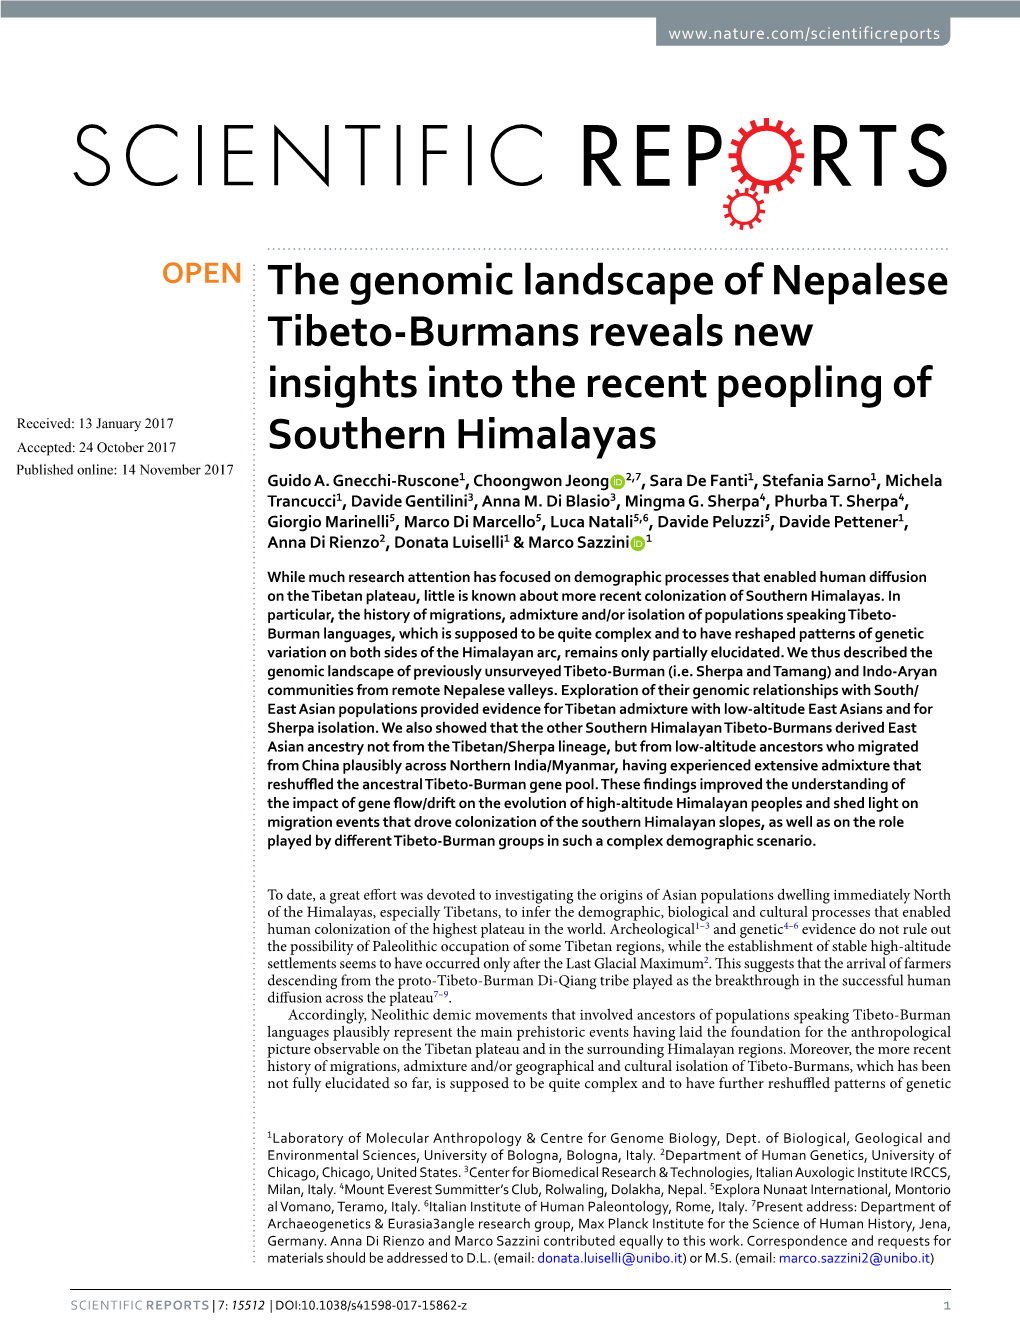 The Genomic Landscape of Nepalese Tibeto-Burmans Reveals New